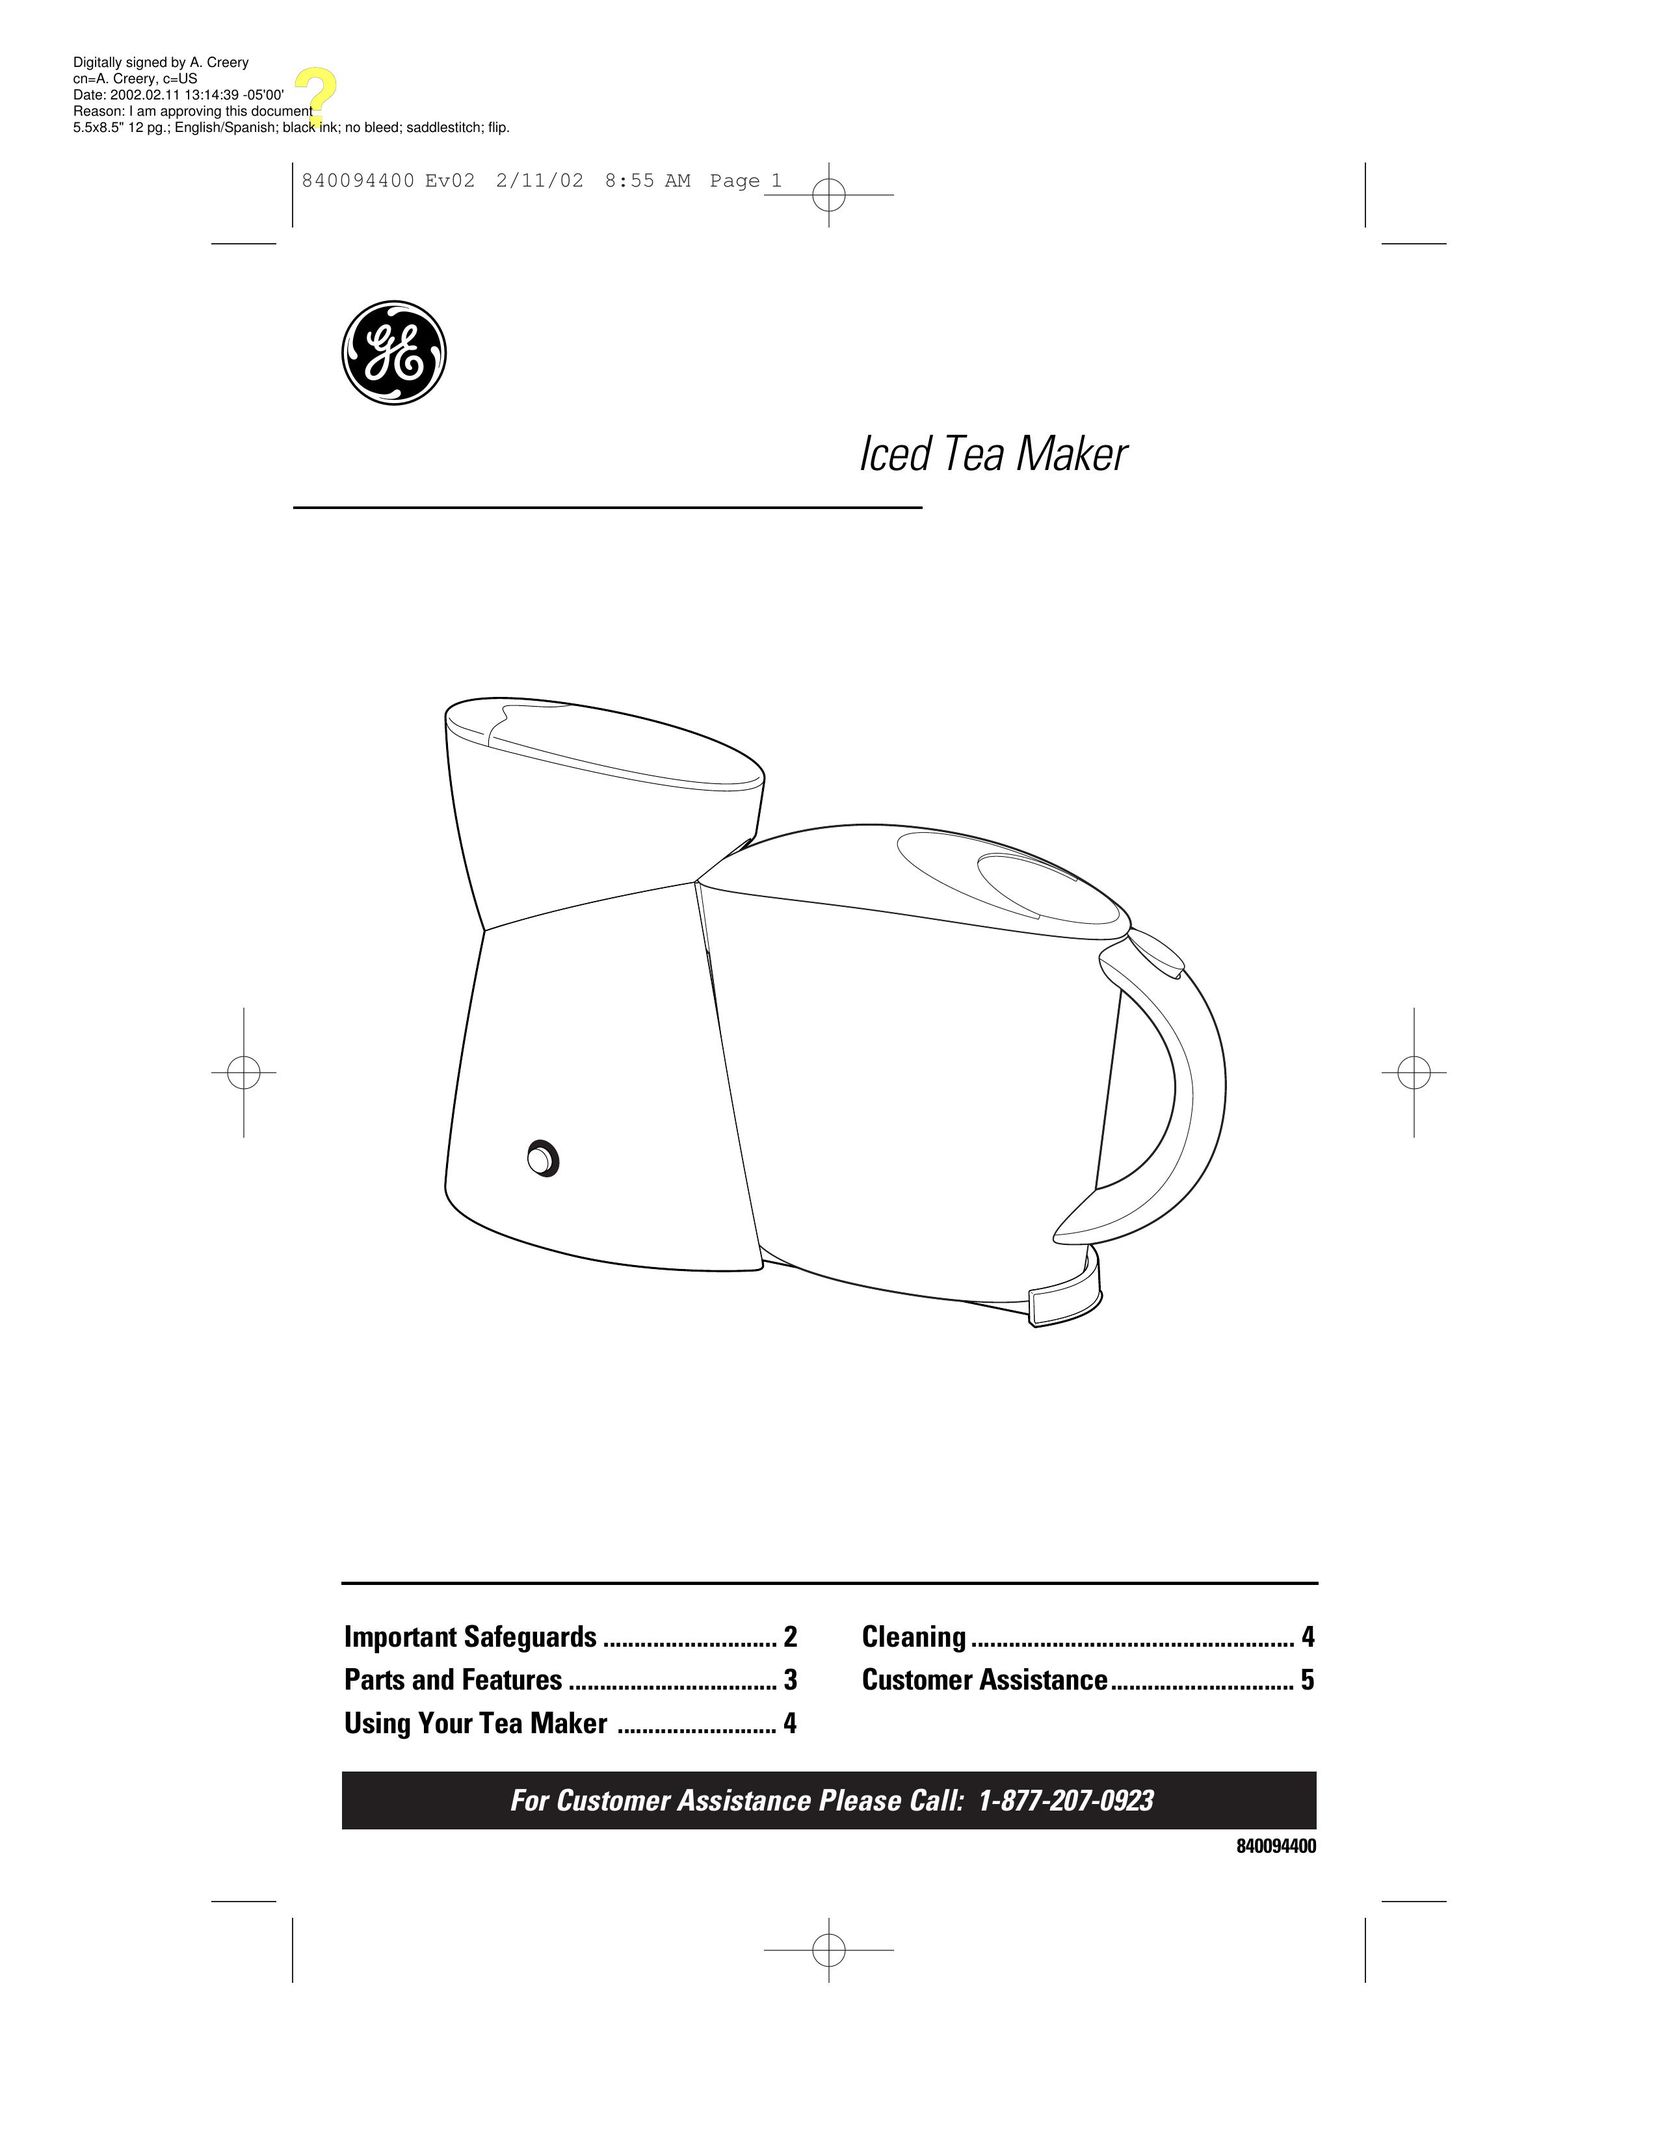 GE 840094400 Ice Tea Maker User Manual